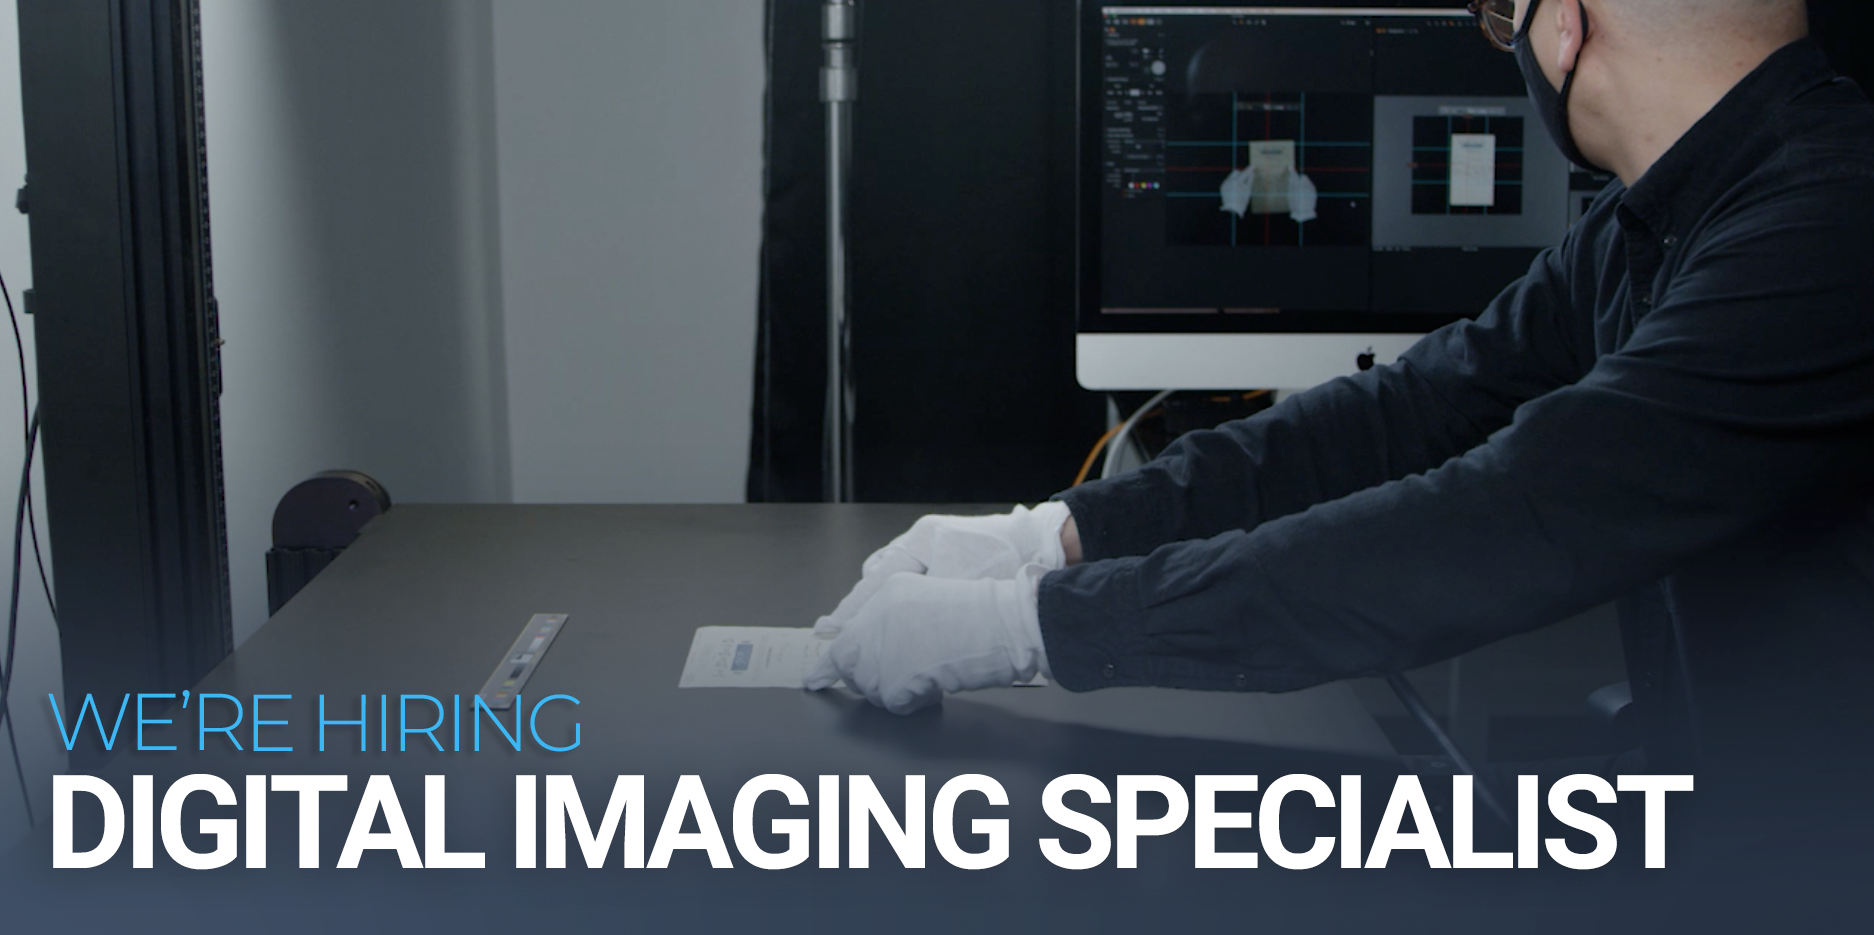 NOW HIRING: Digital Imaging Specialist